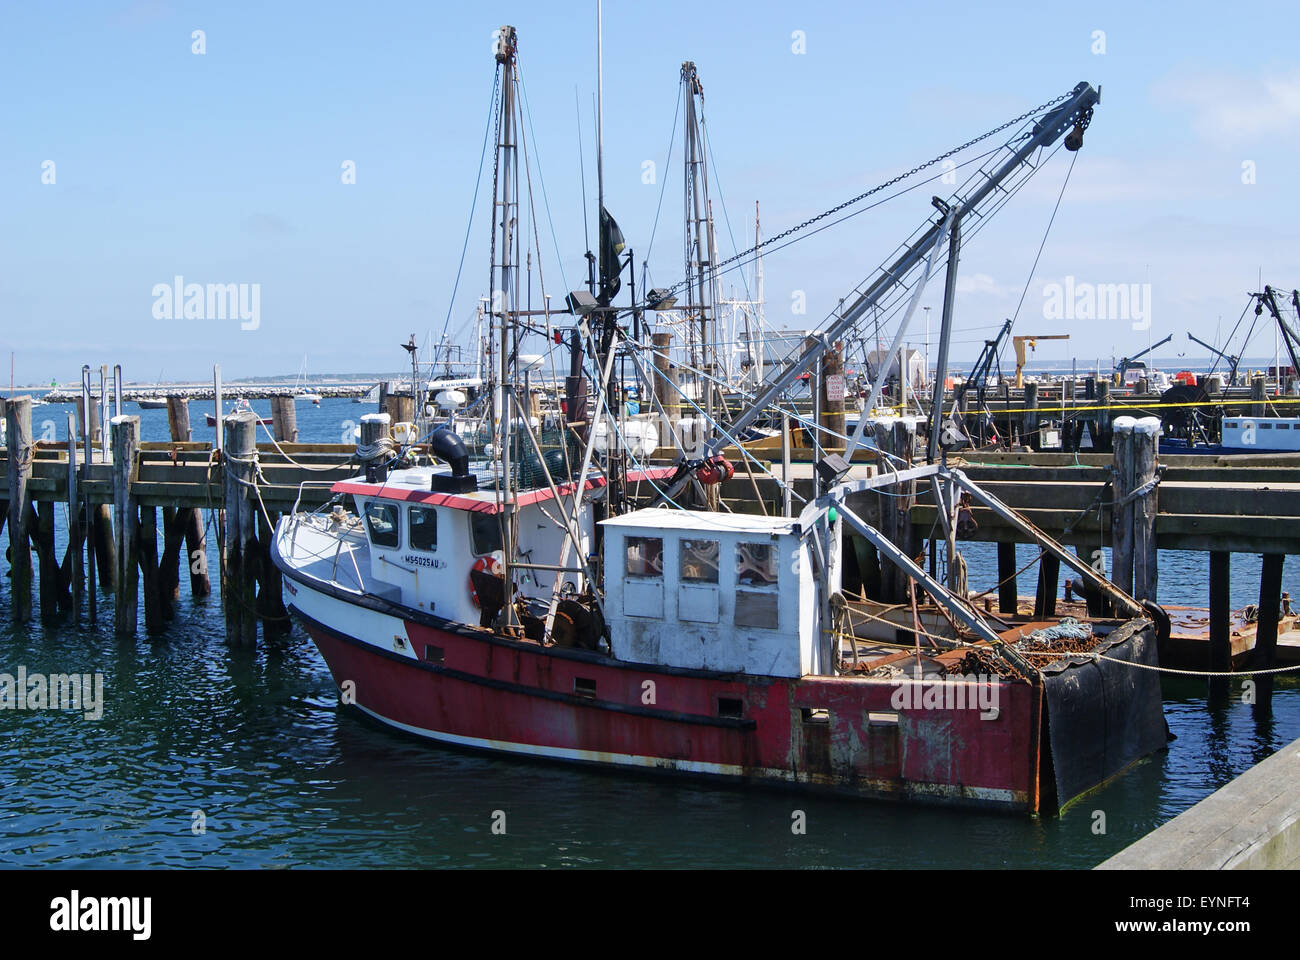 https://c8.alamy.com/comp/EYNFT4/an-old-fishing-trawler-at-macmillan-wharf-in-provincetown-cape-cod-EYNFT4.jpg